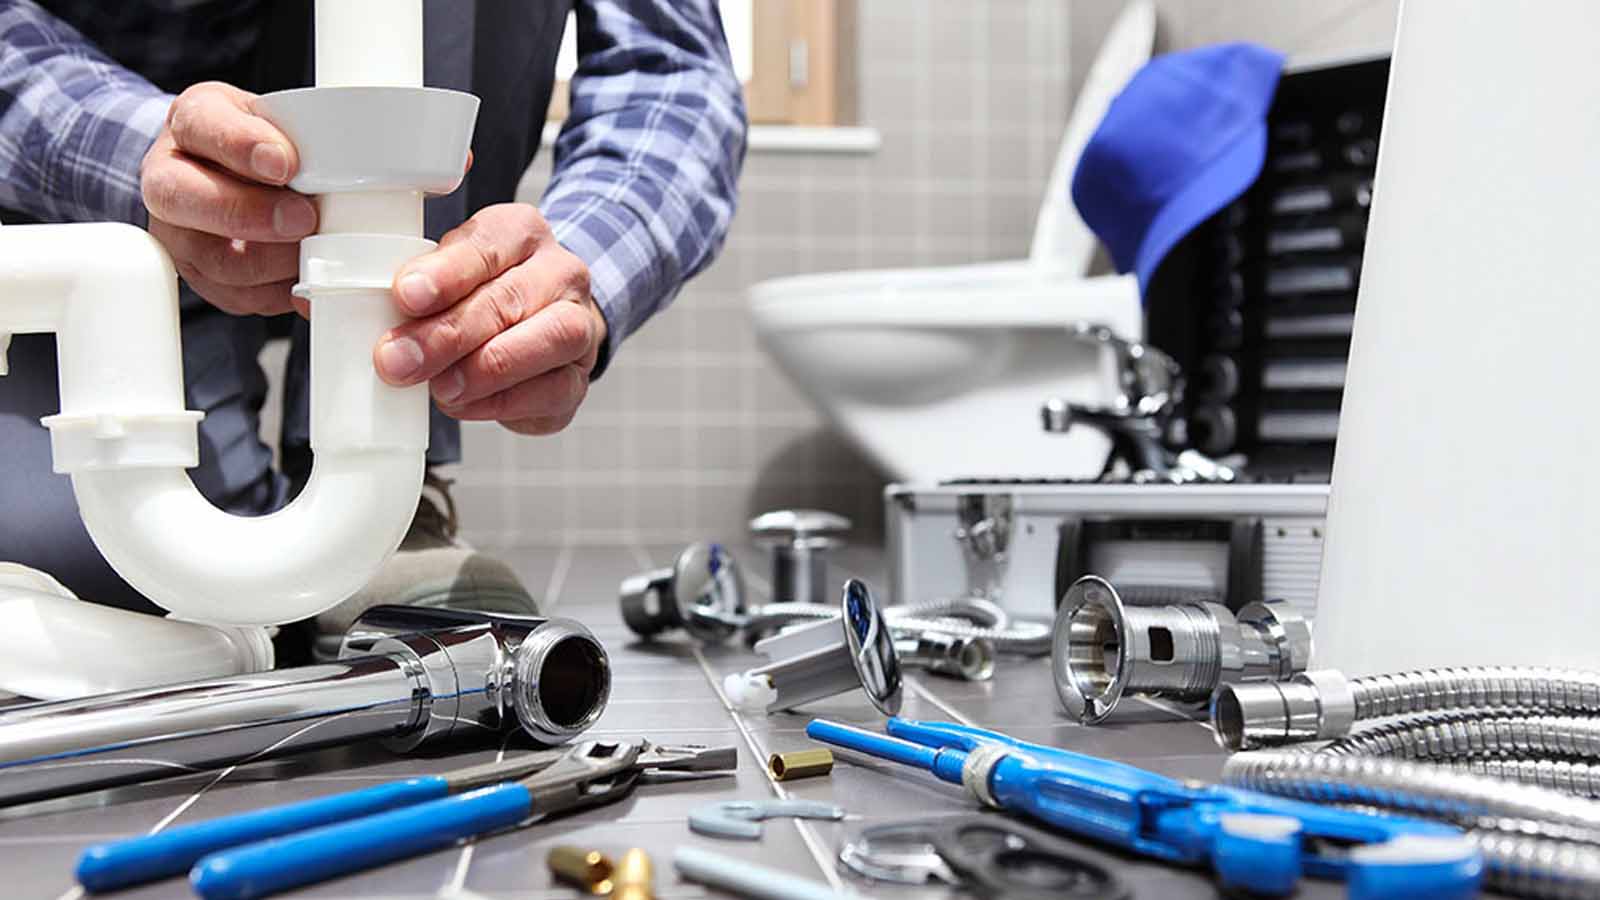 trade tool bundle for plumbers  Trade Tools Bundle: £30,000 Cash